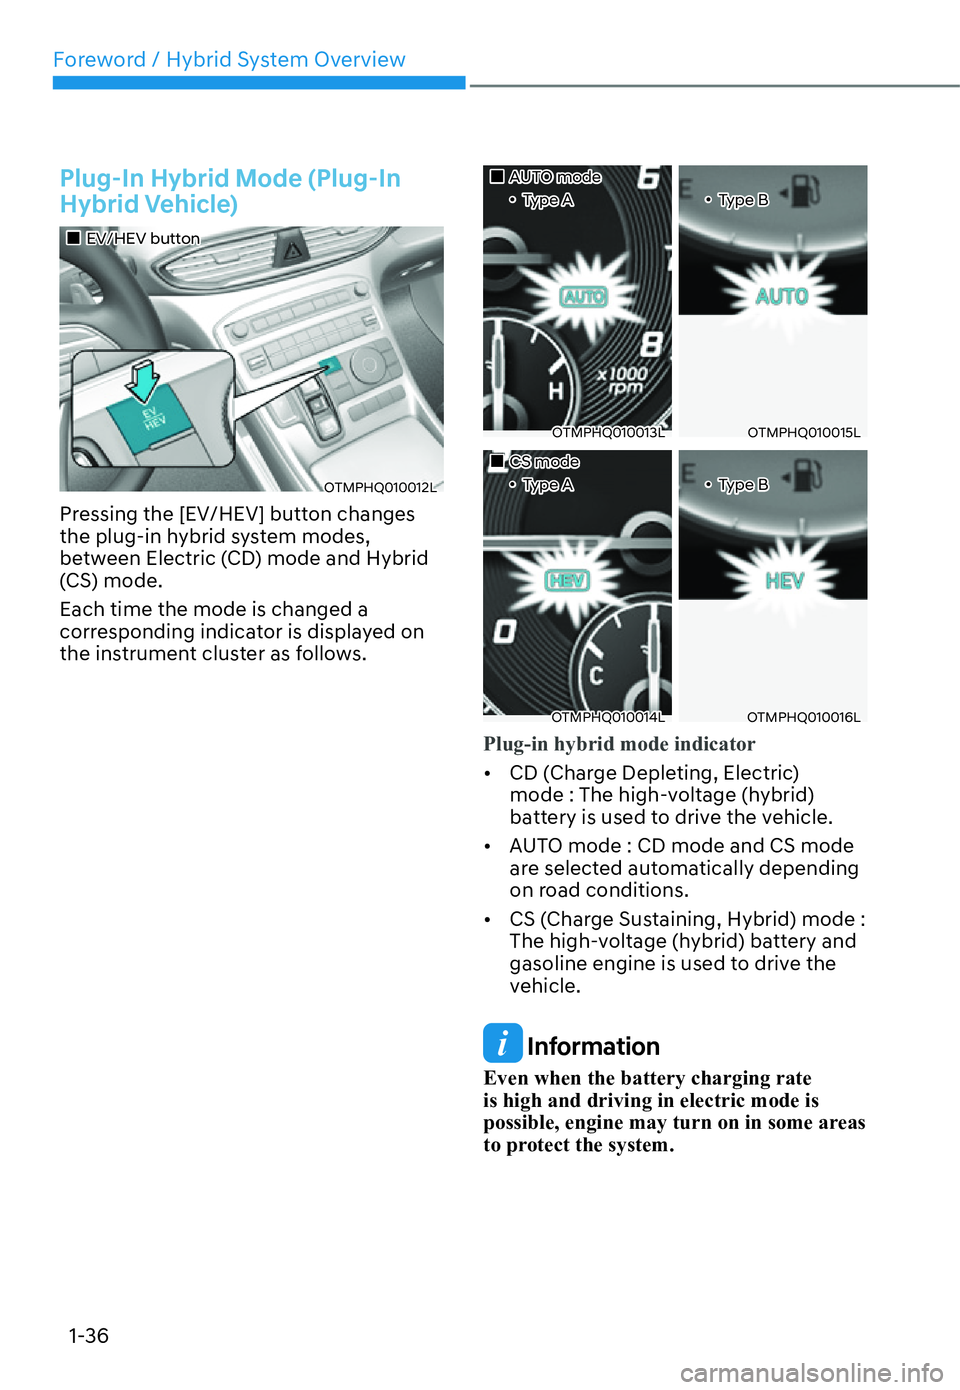 HYUNDAI SANTA FE HYBRID 2022  Owners Manual Foreword / Hybrid System Overview
1-36
Plug-In Hybrid Mode (Plug-In  
Hybrid Vehicle)
��„EV/HEV button
OTMPHQ010012L
Pressing the [EV/HEV] button changes  
the plug-in hybrid system modes, 
between